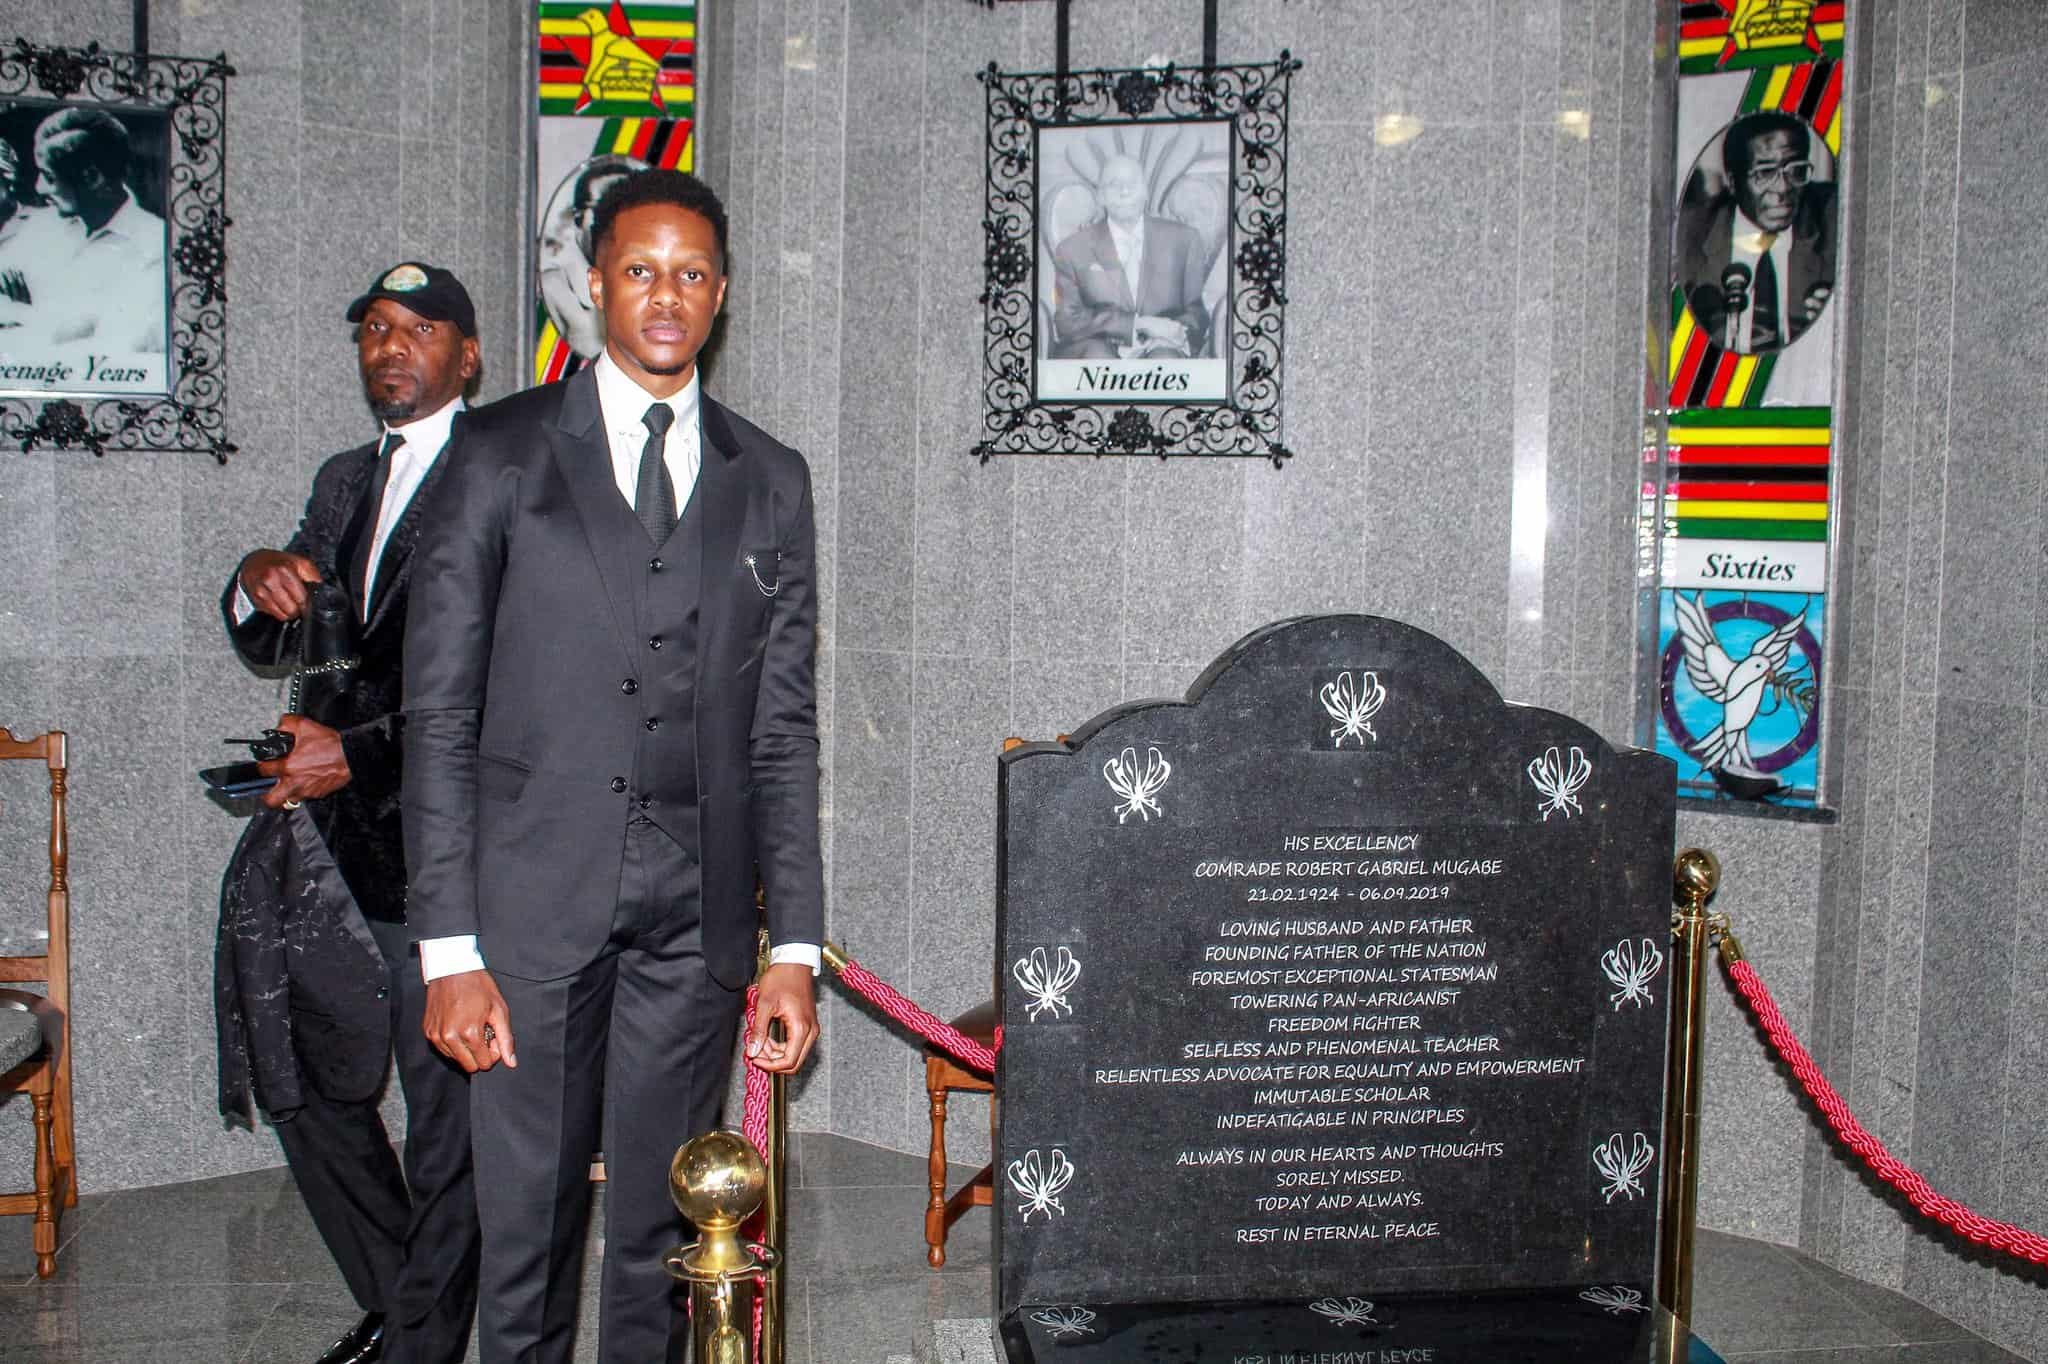 PICTURE: Inside Robert Gabriel Mugabe mausoleum